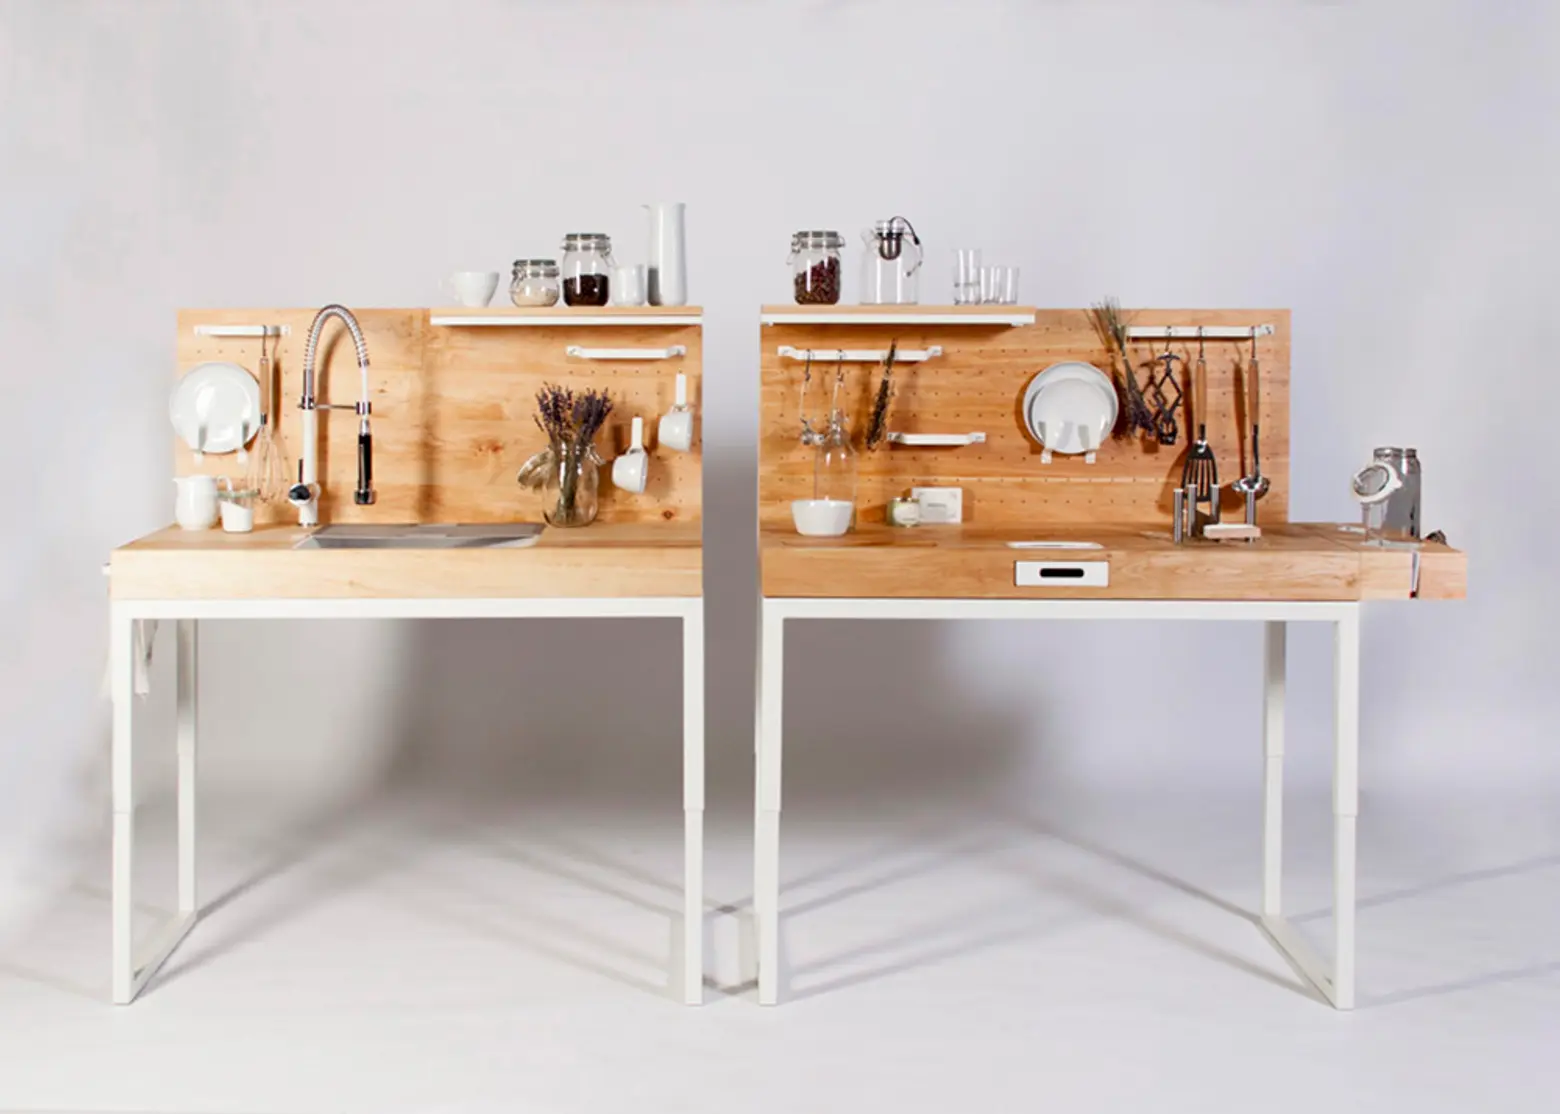 ChopChop: A Hyper-Functional Kitchen Unit by Industrial Designer Dirk Biotto